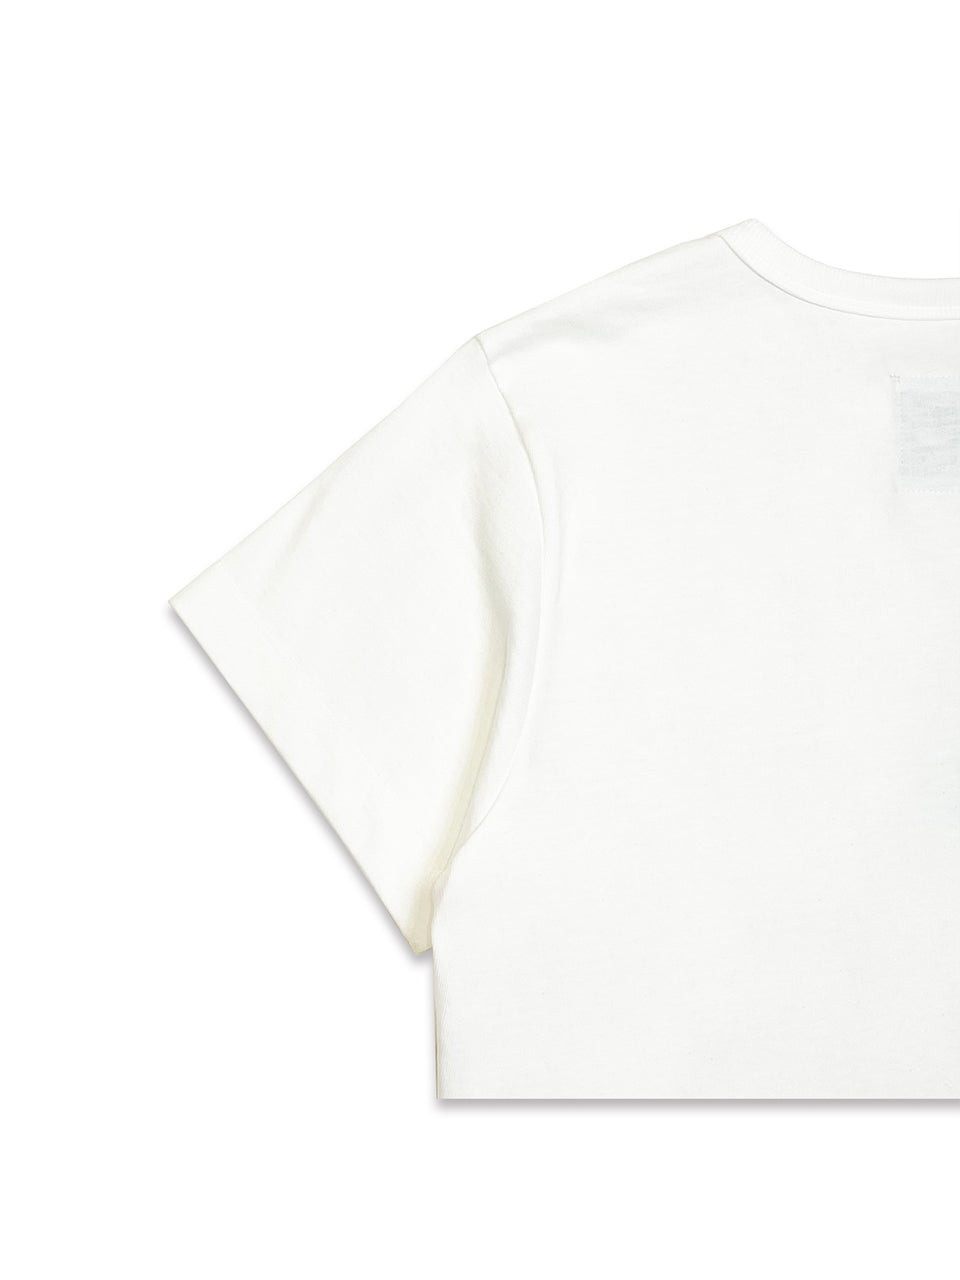 Odd Toys Crop T-Shirt / White